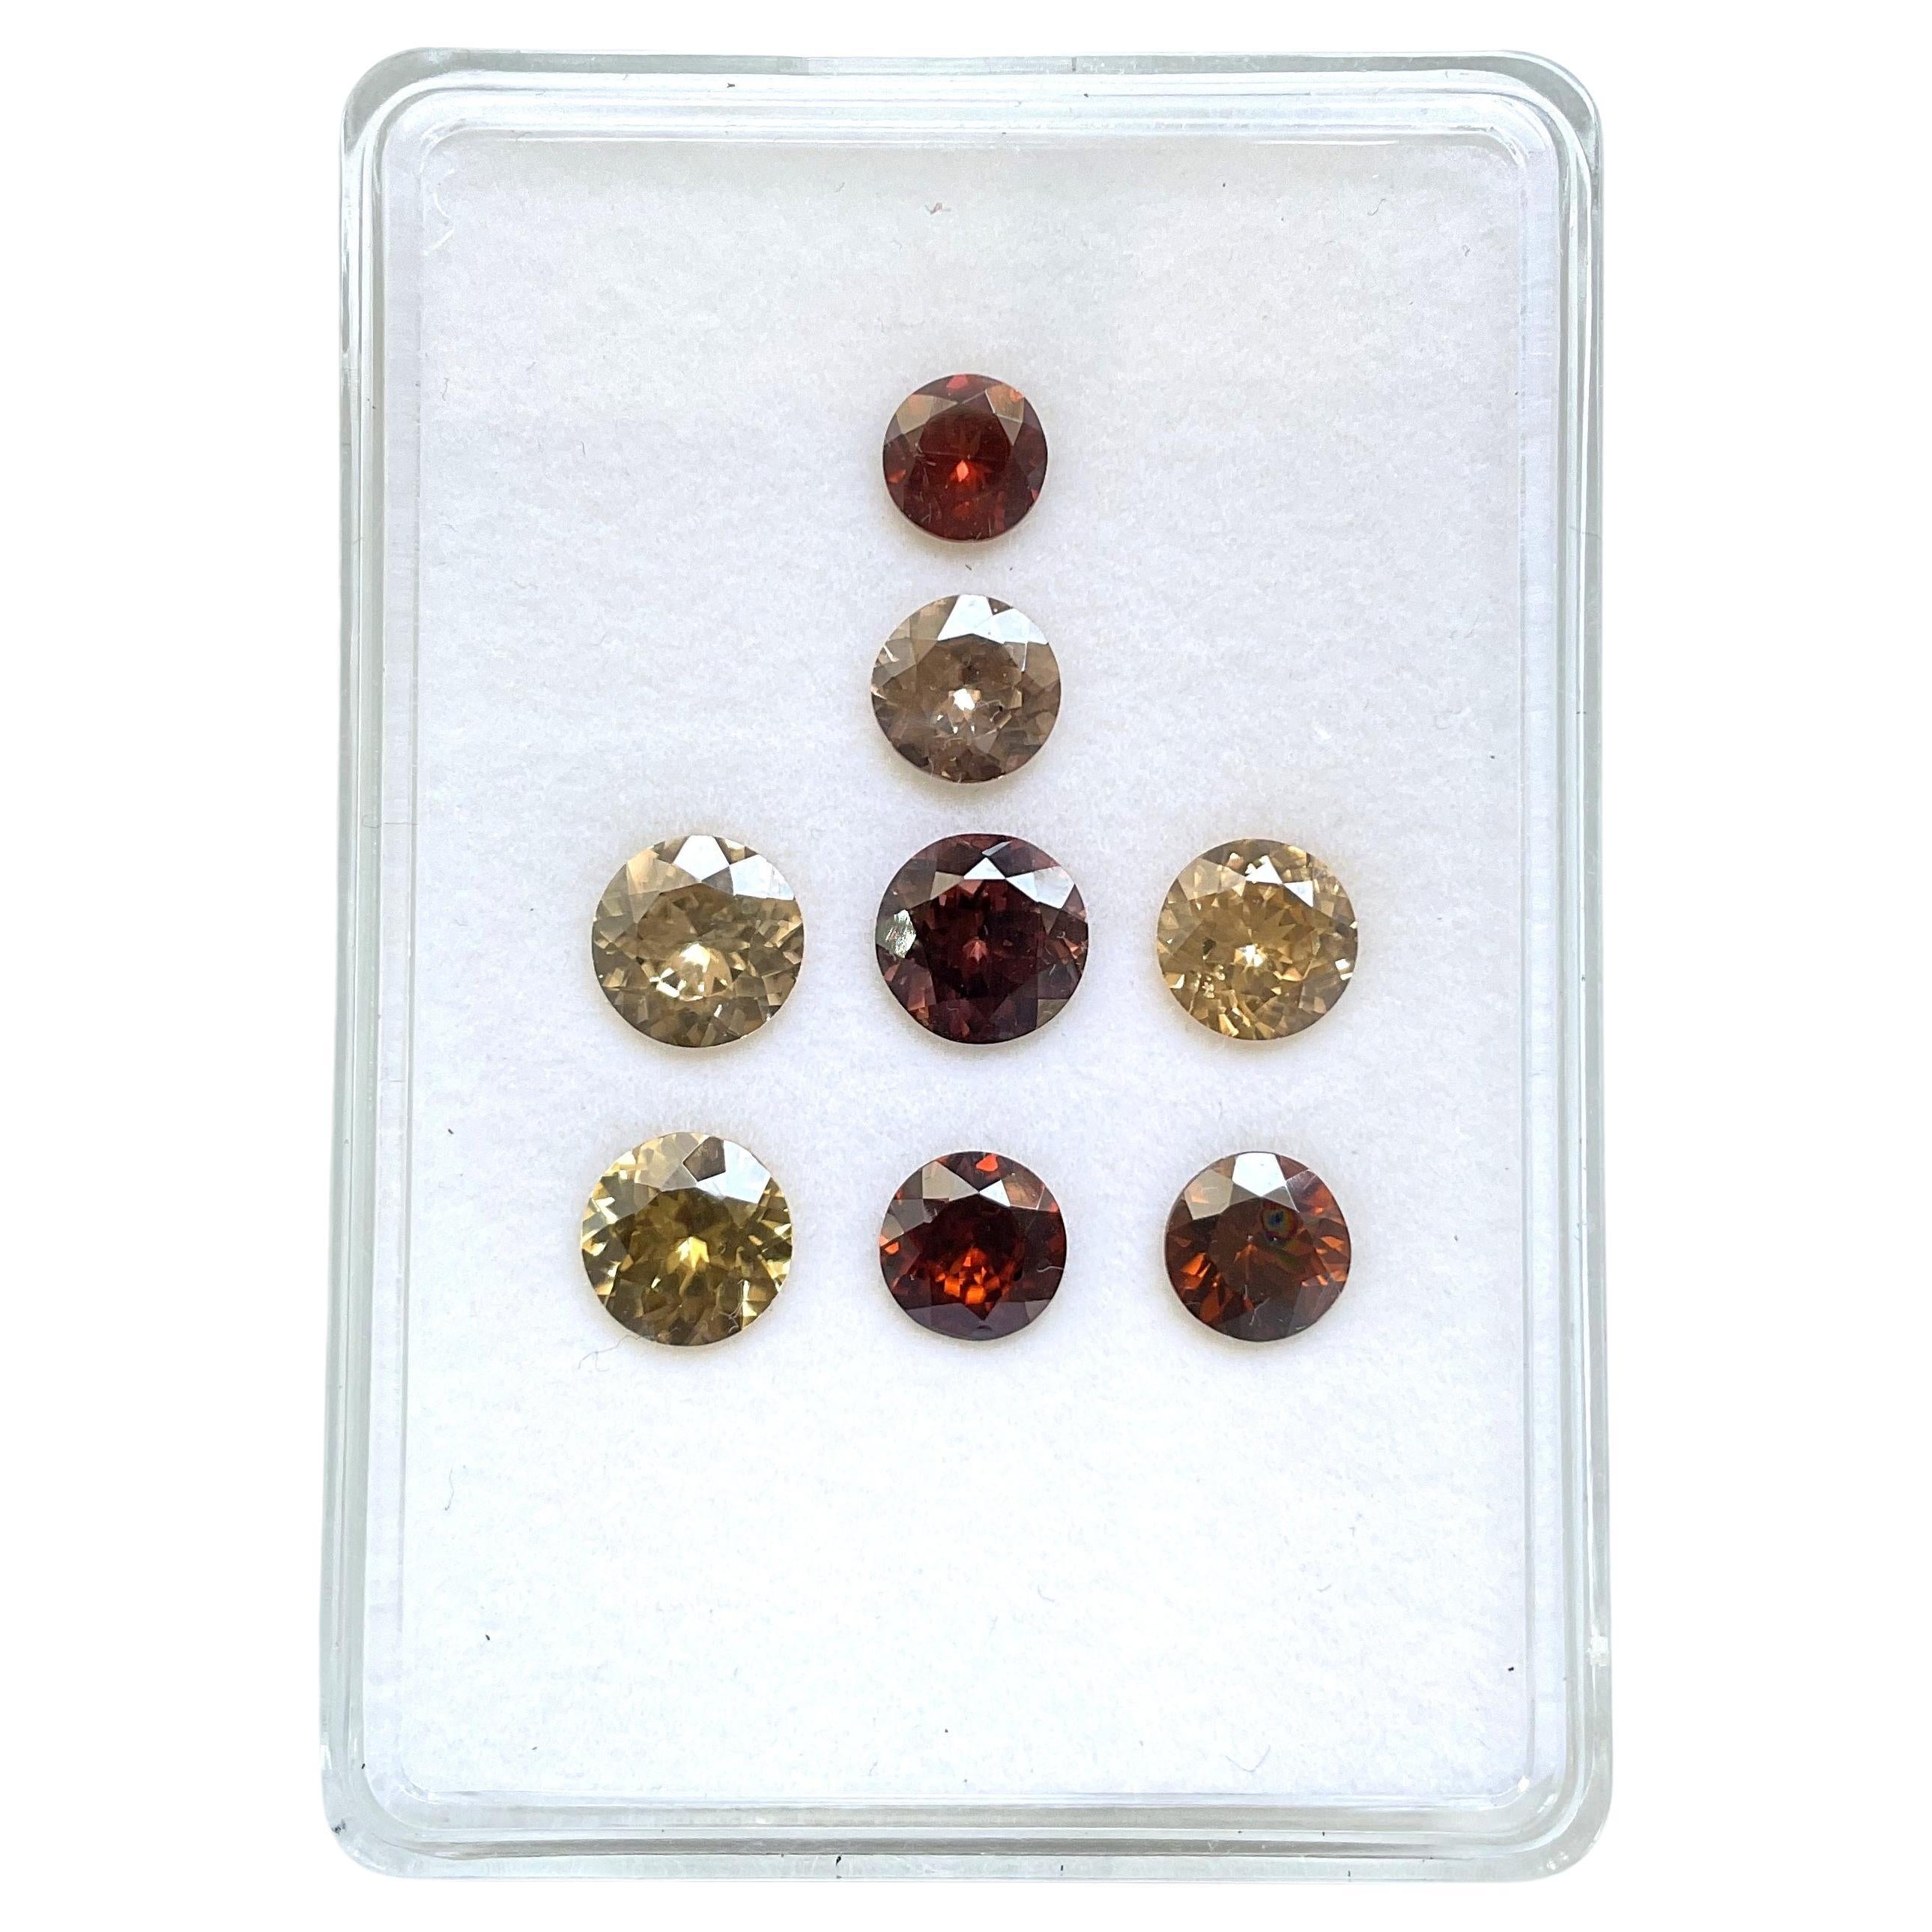 32.45 Carat Tanzania Zircon Round Faceted Natural Cutstone Fine Jewelry Gemstone